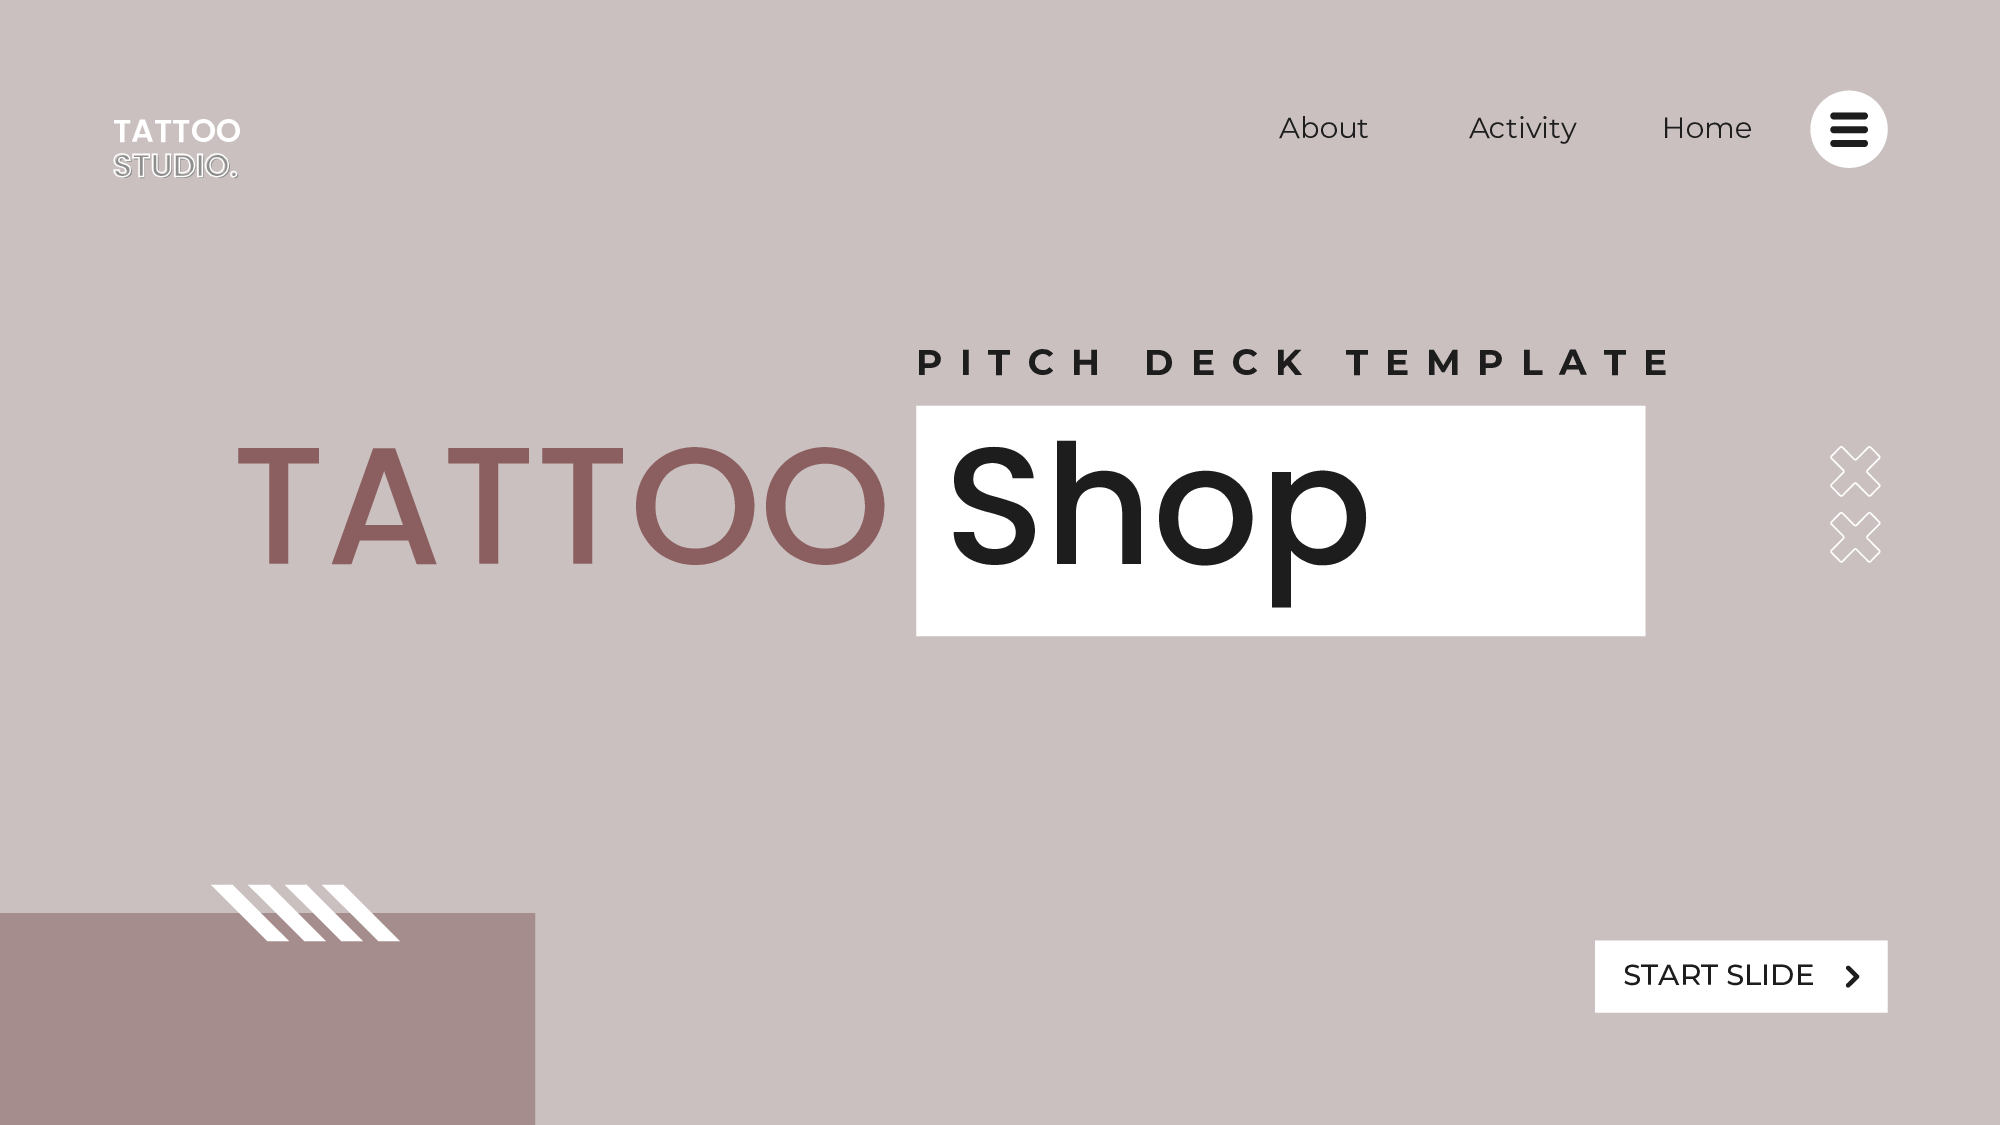 Tattoo Shop Pitch Deck Template